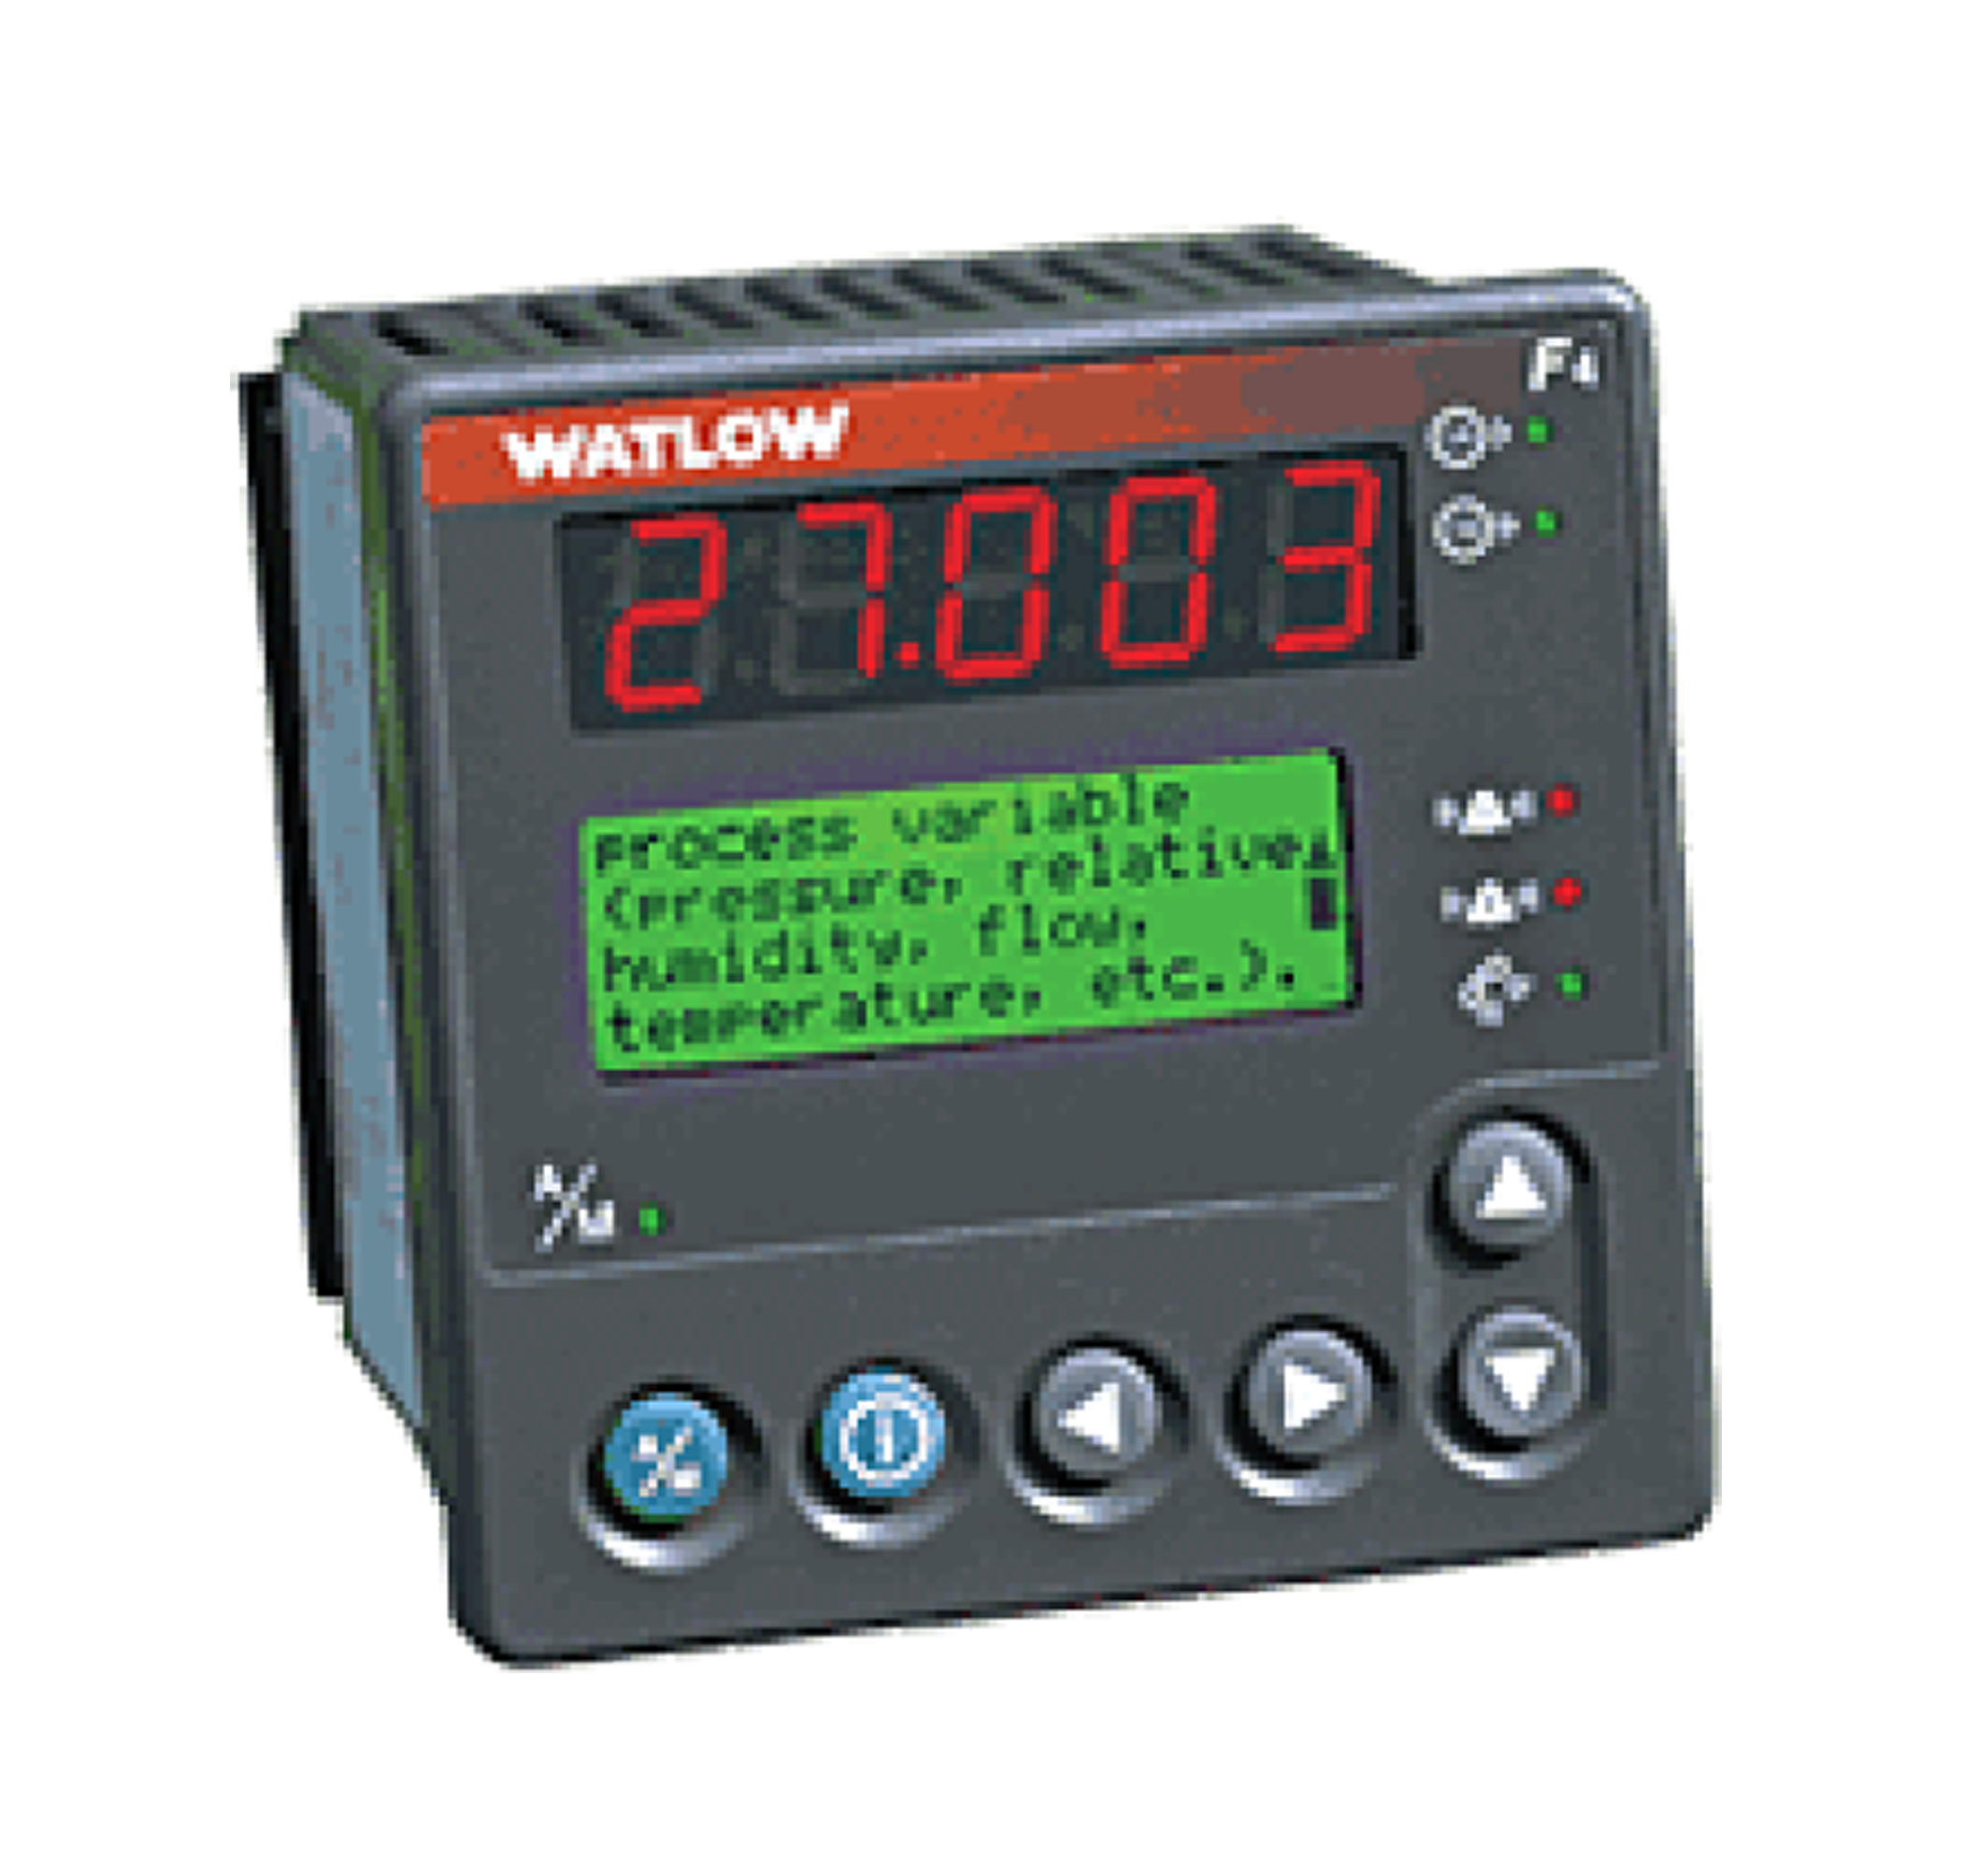 Temp p. Watlow 93 контроллер температурный. Watlow контроллер Series 9720. Watlow 93 контроллер температурный меню. Watlow контроллер чиллера модели.